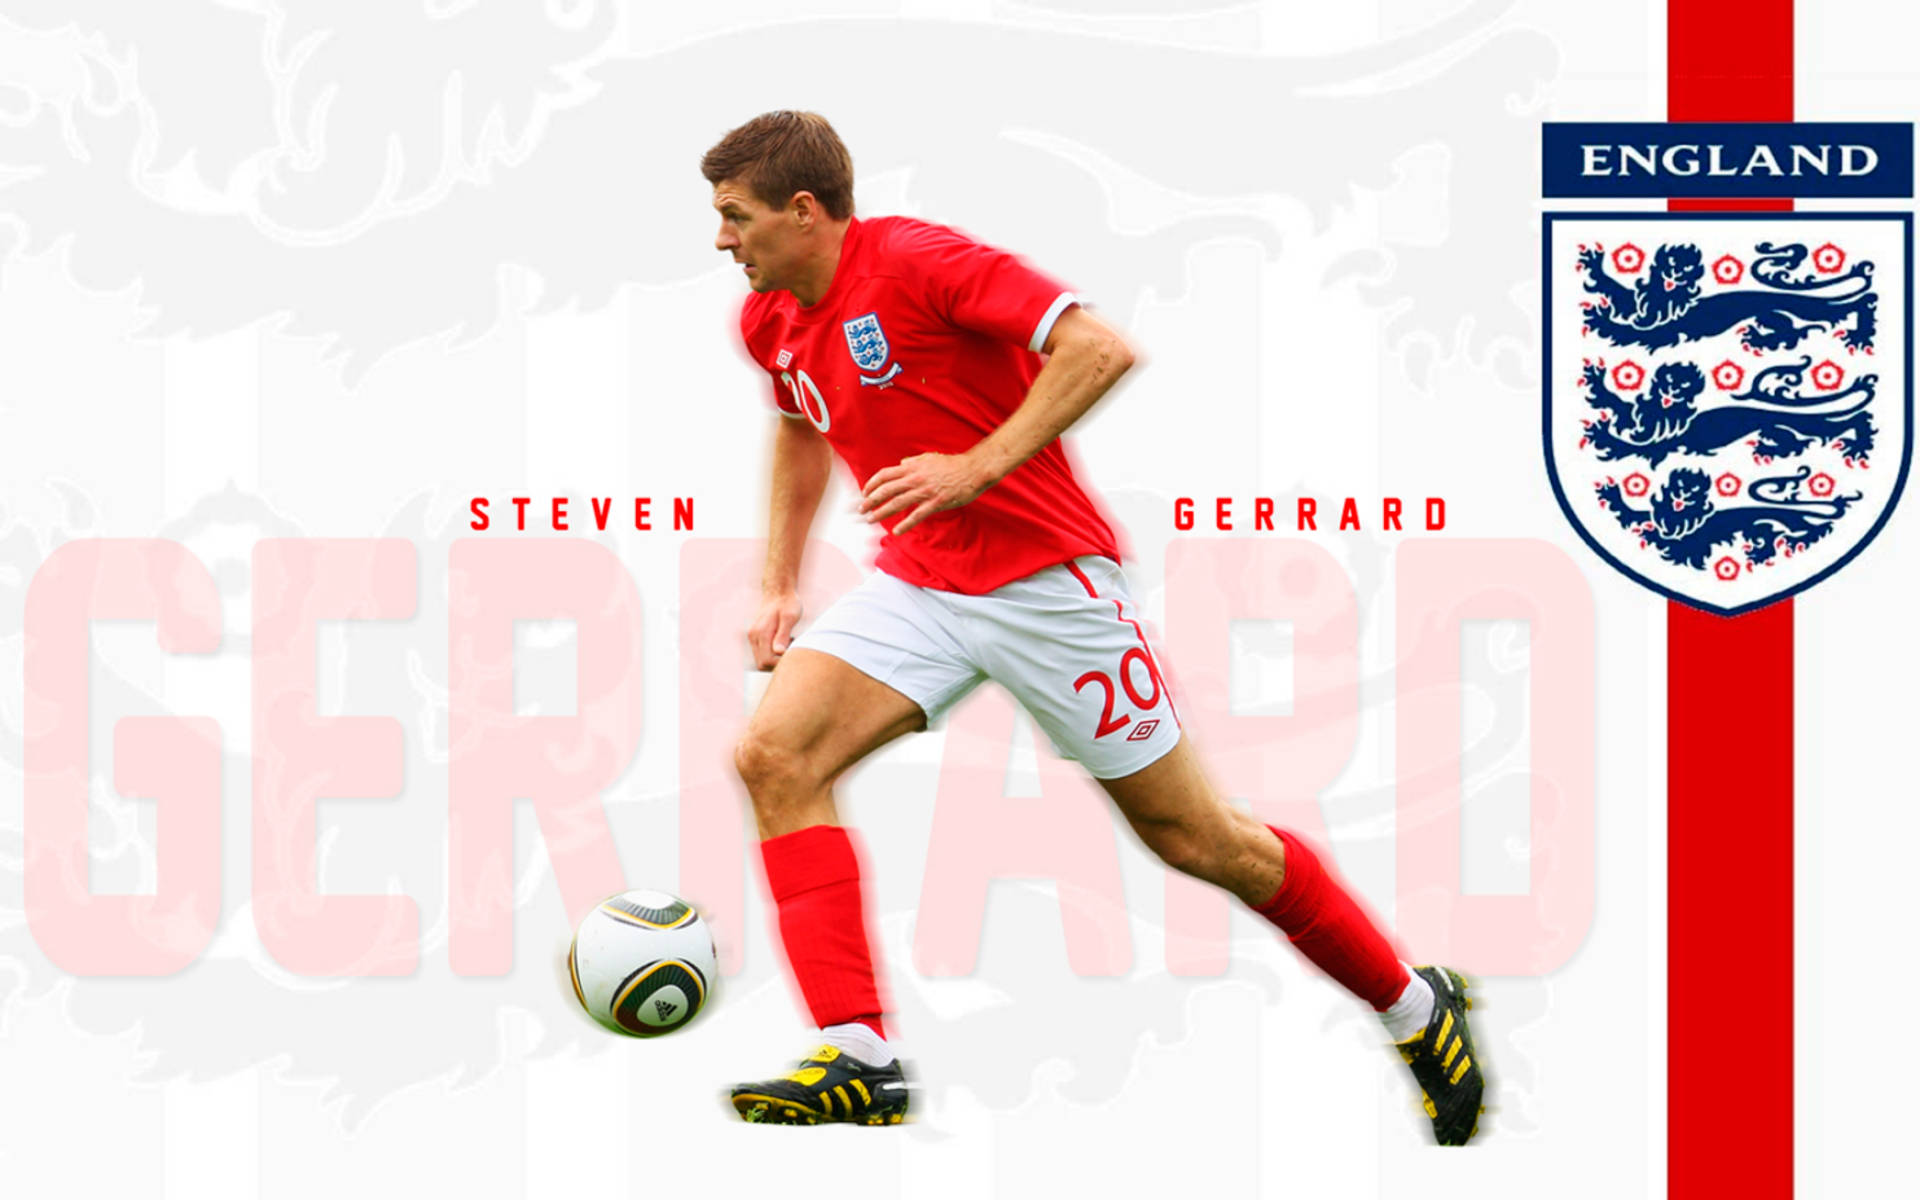 Steven Gerrard English Footballer